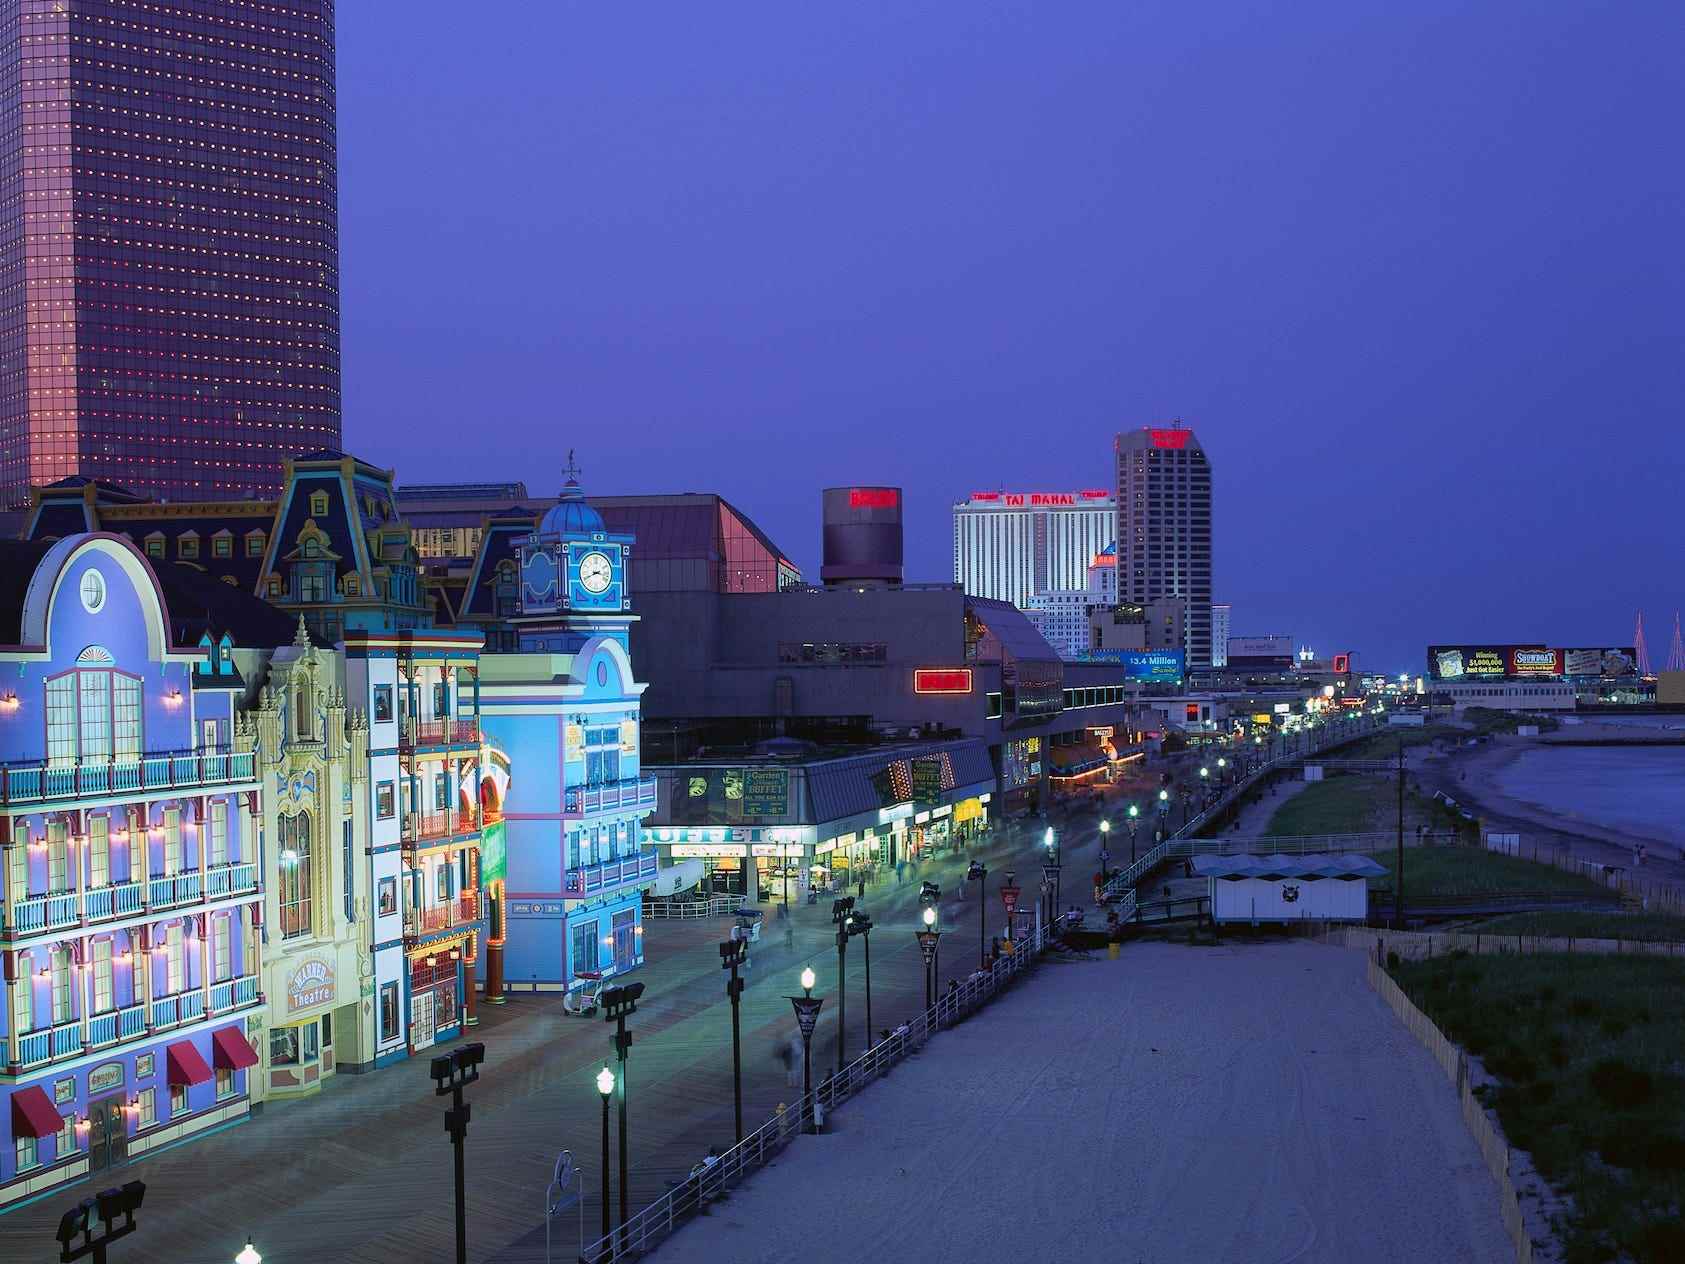 Die Promenade von Atlantic City mit dem Bally's Casino.